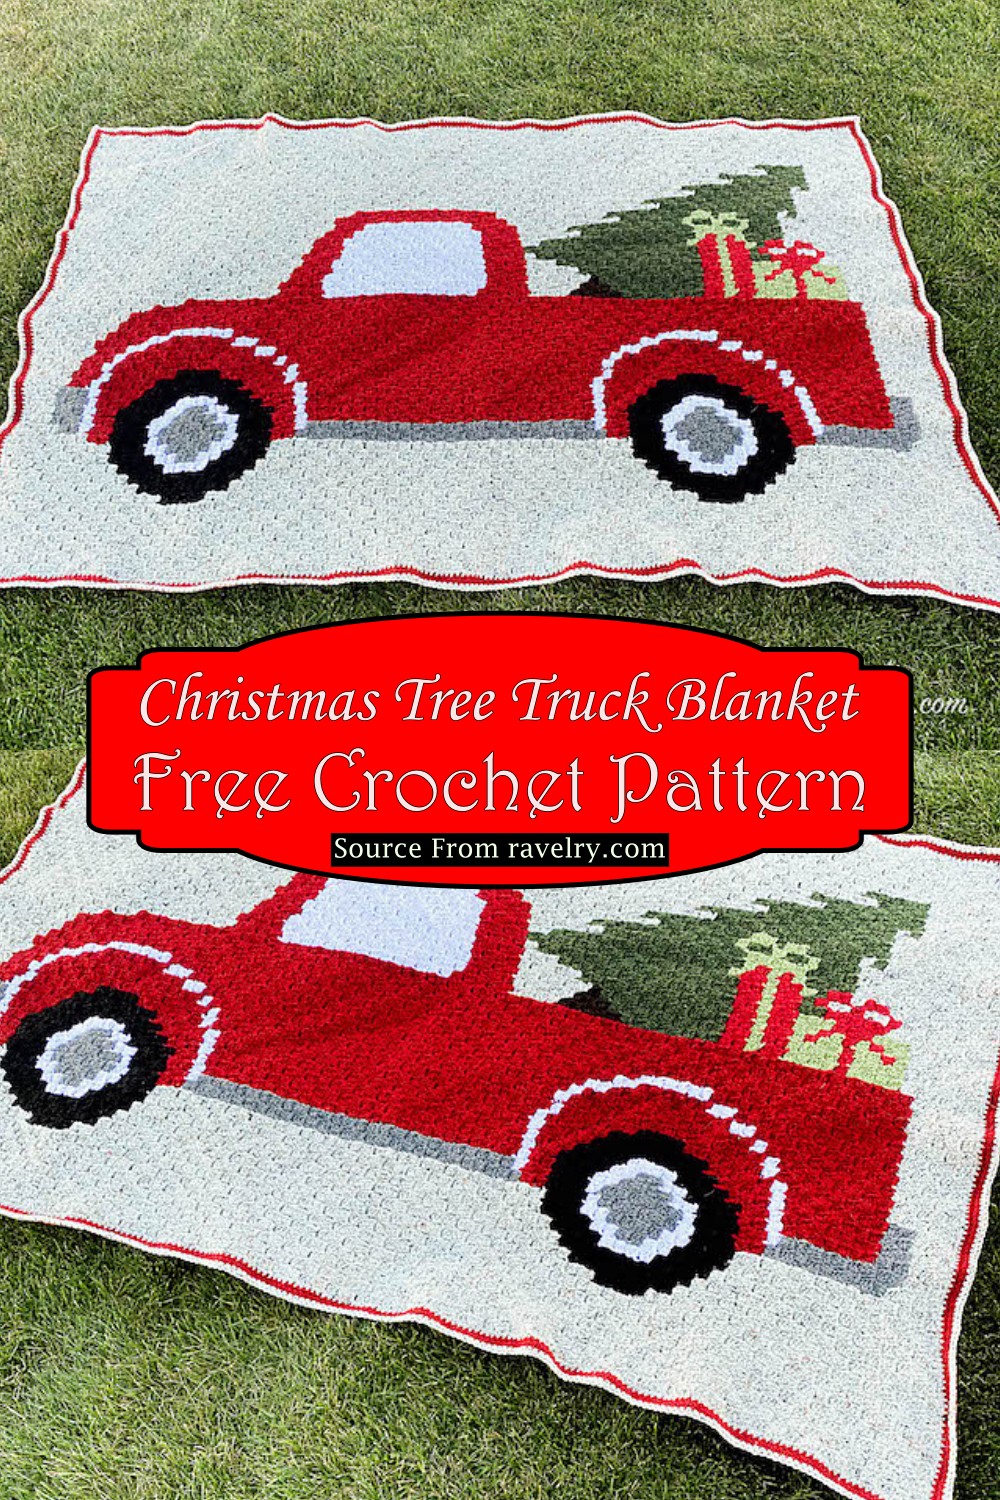 Crochet Christmas Tree Truck Blanket Pattern